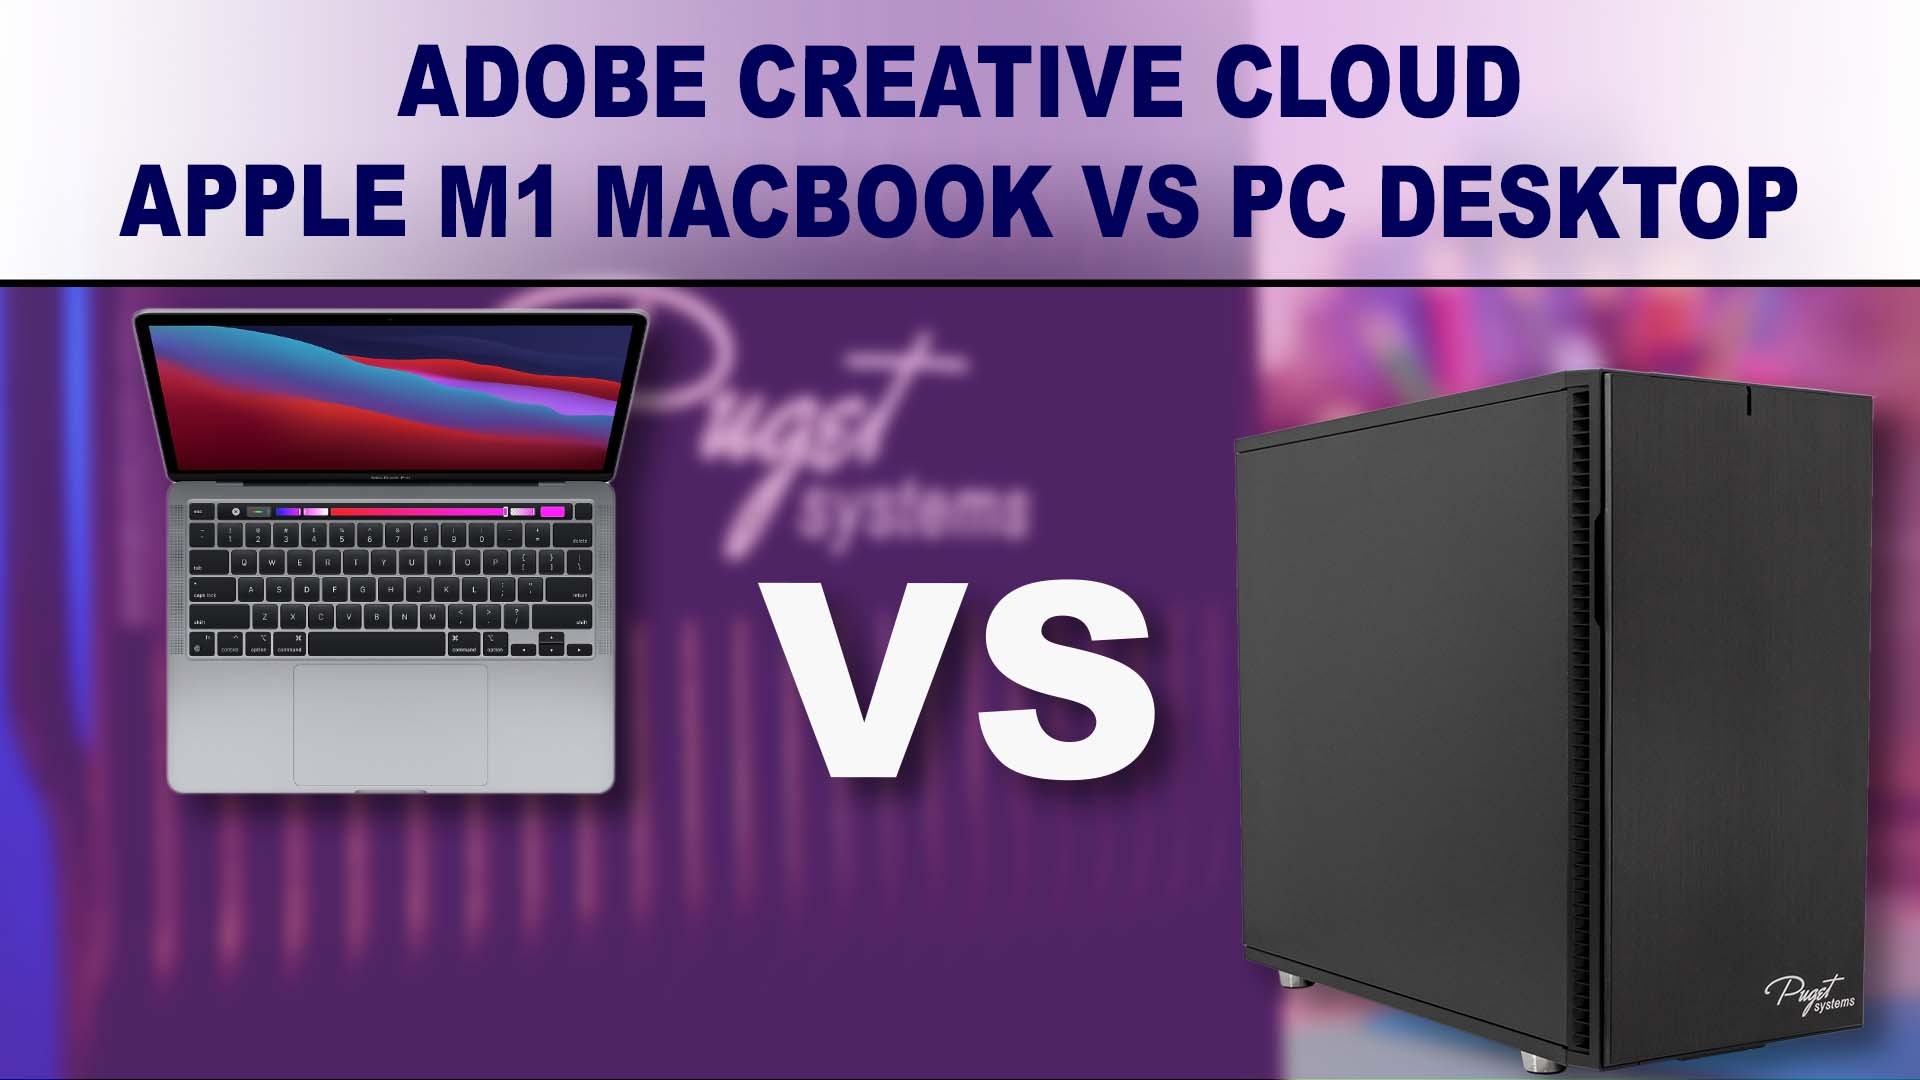 Apple M1 MacBook vs PC Desktop workstation